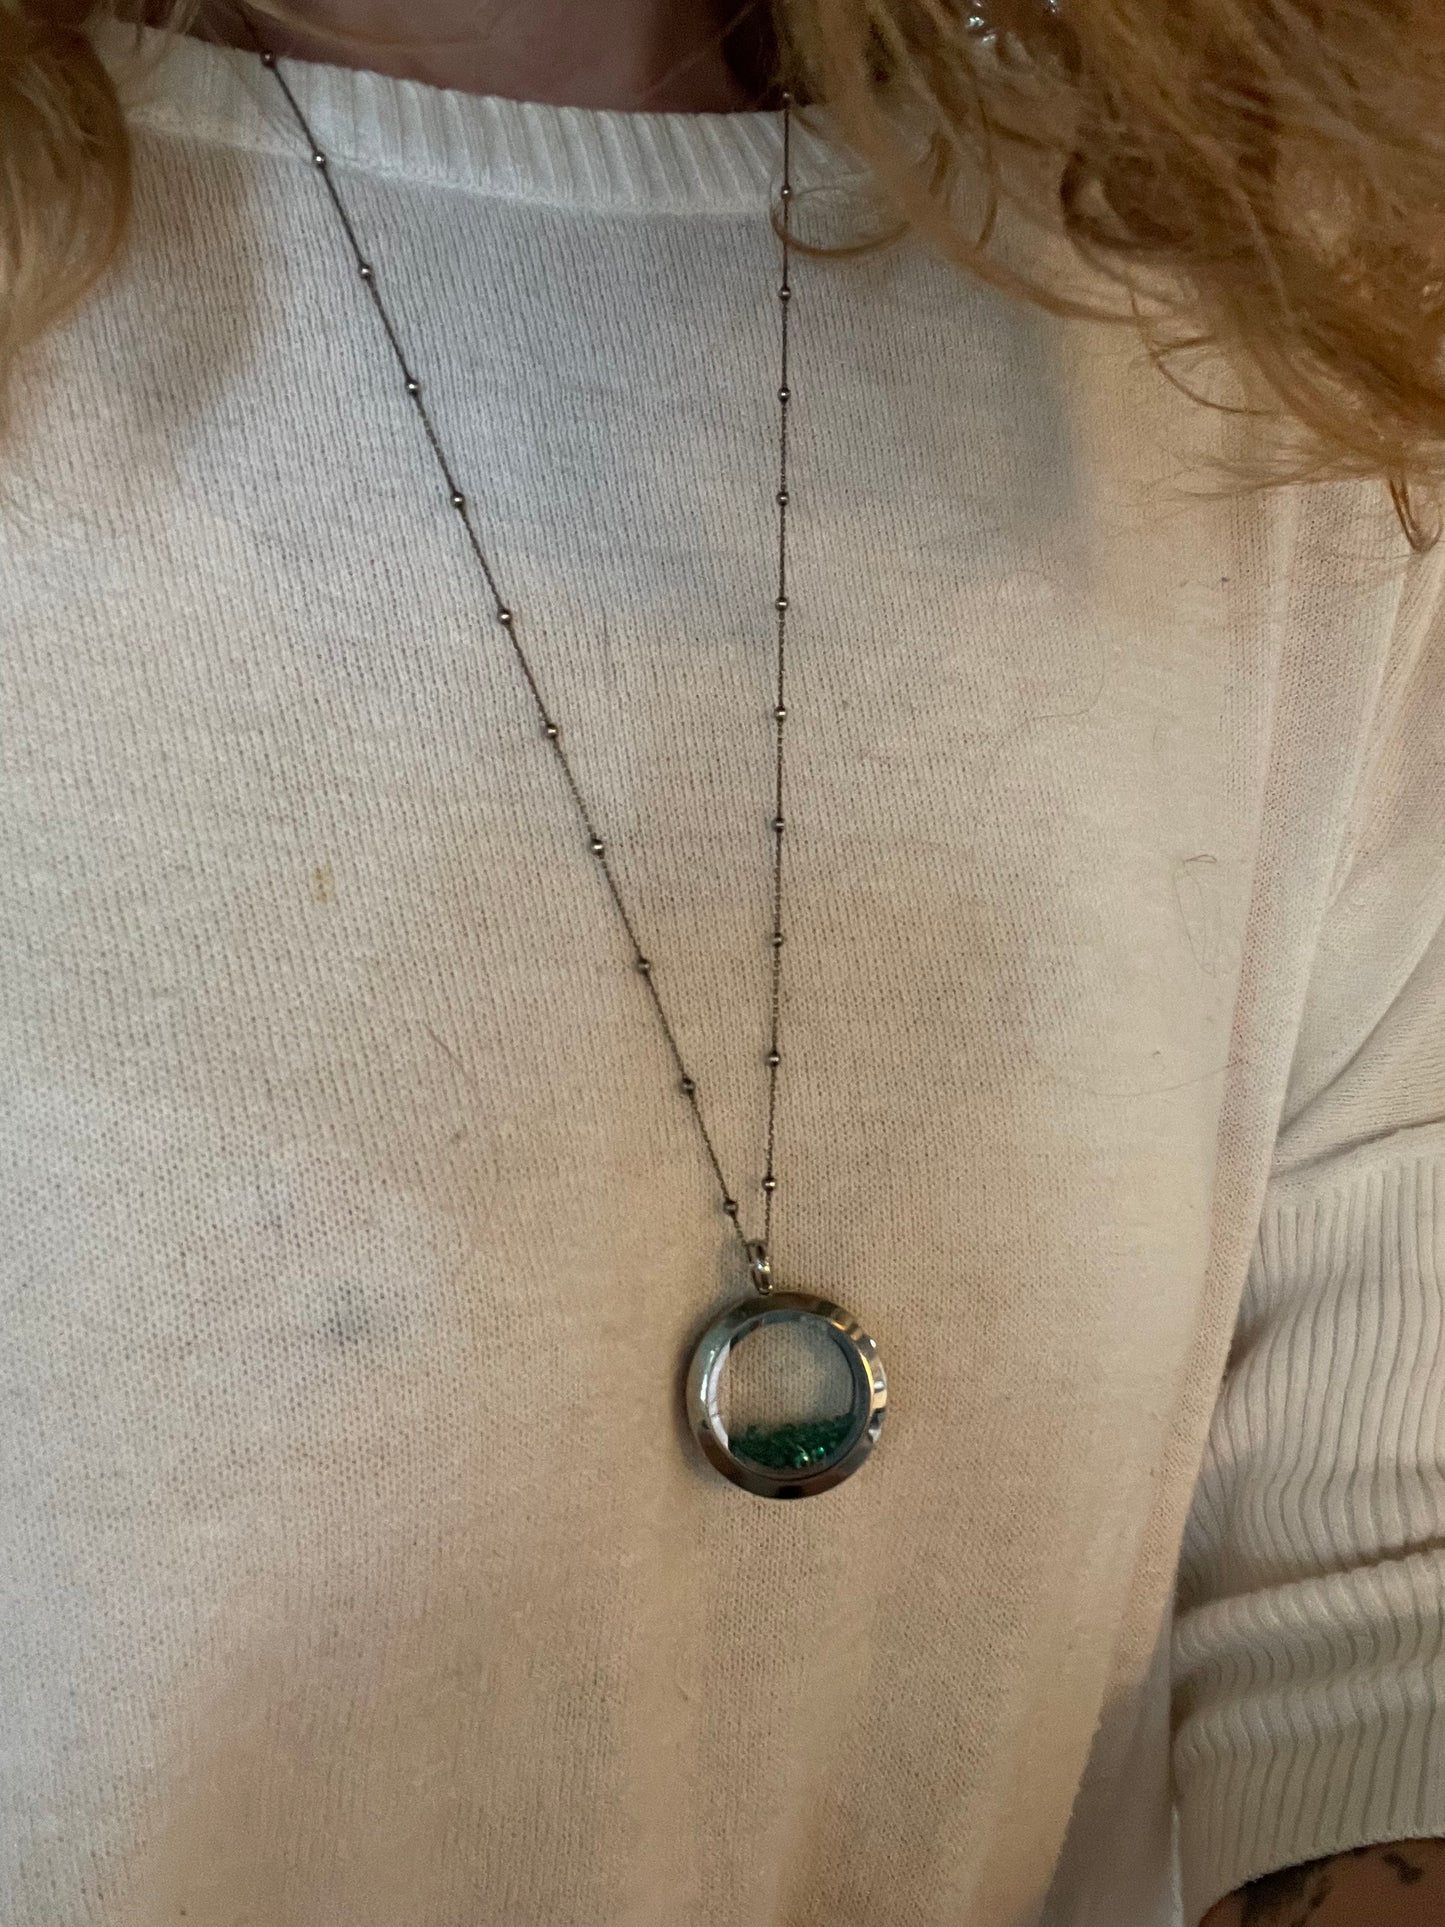 Loose green gemstone locket necklace